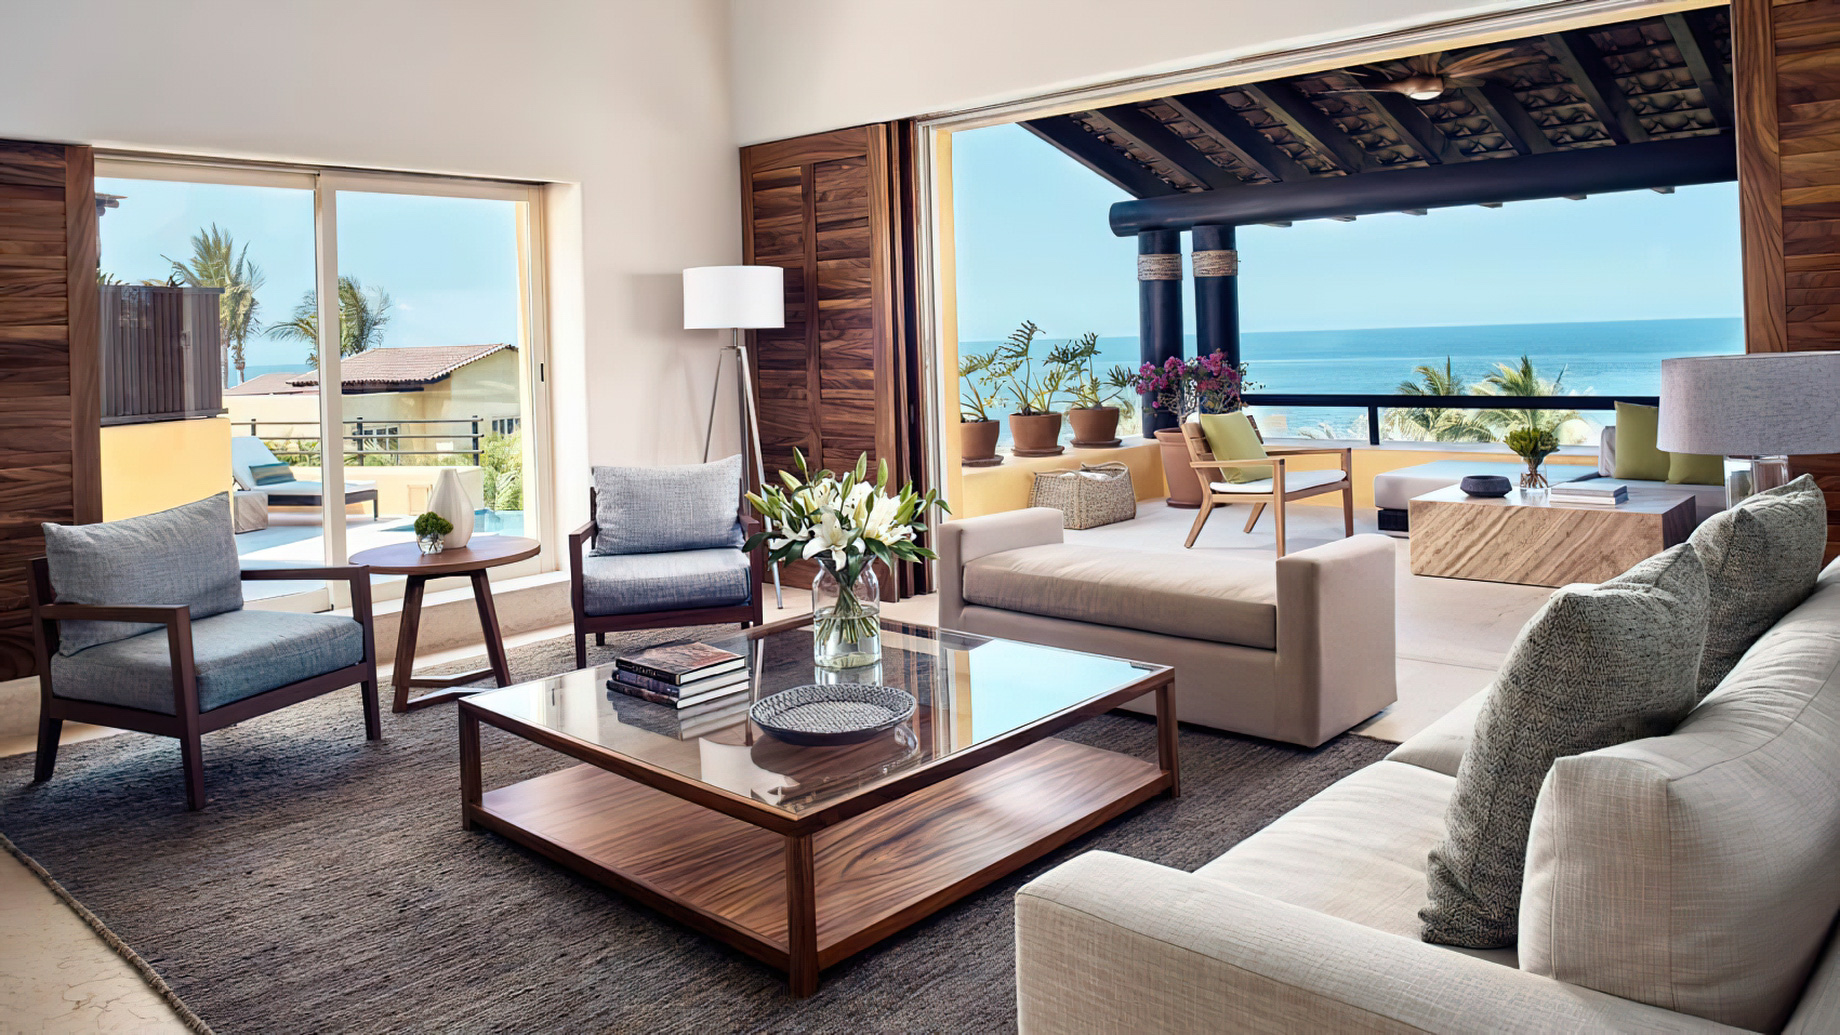 Four Seasons Resort Punta Mita – Nayarit, Mexico – Verano Ocean View Villa Living Room View